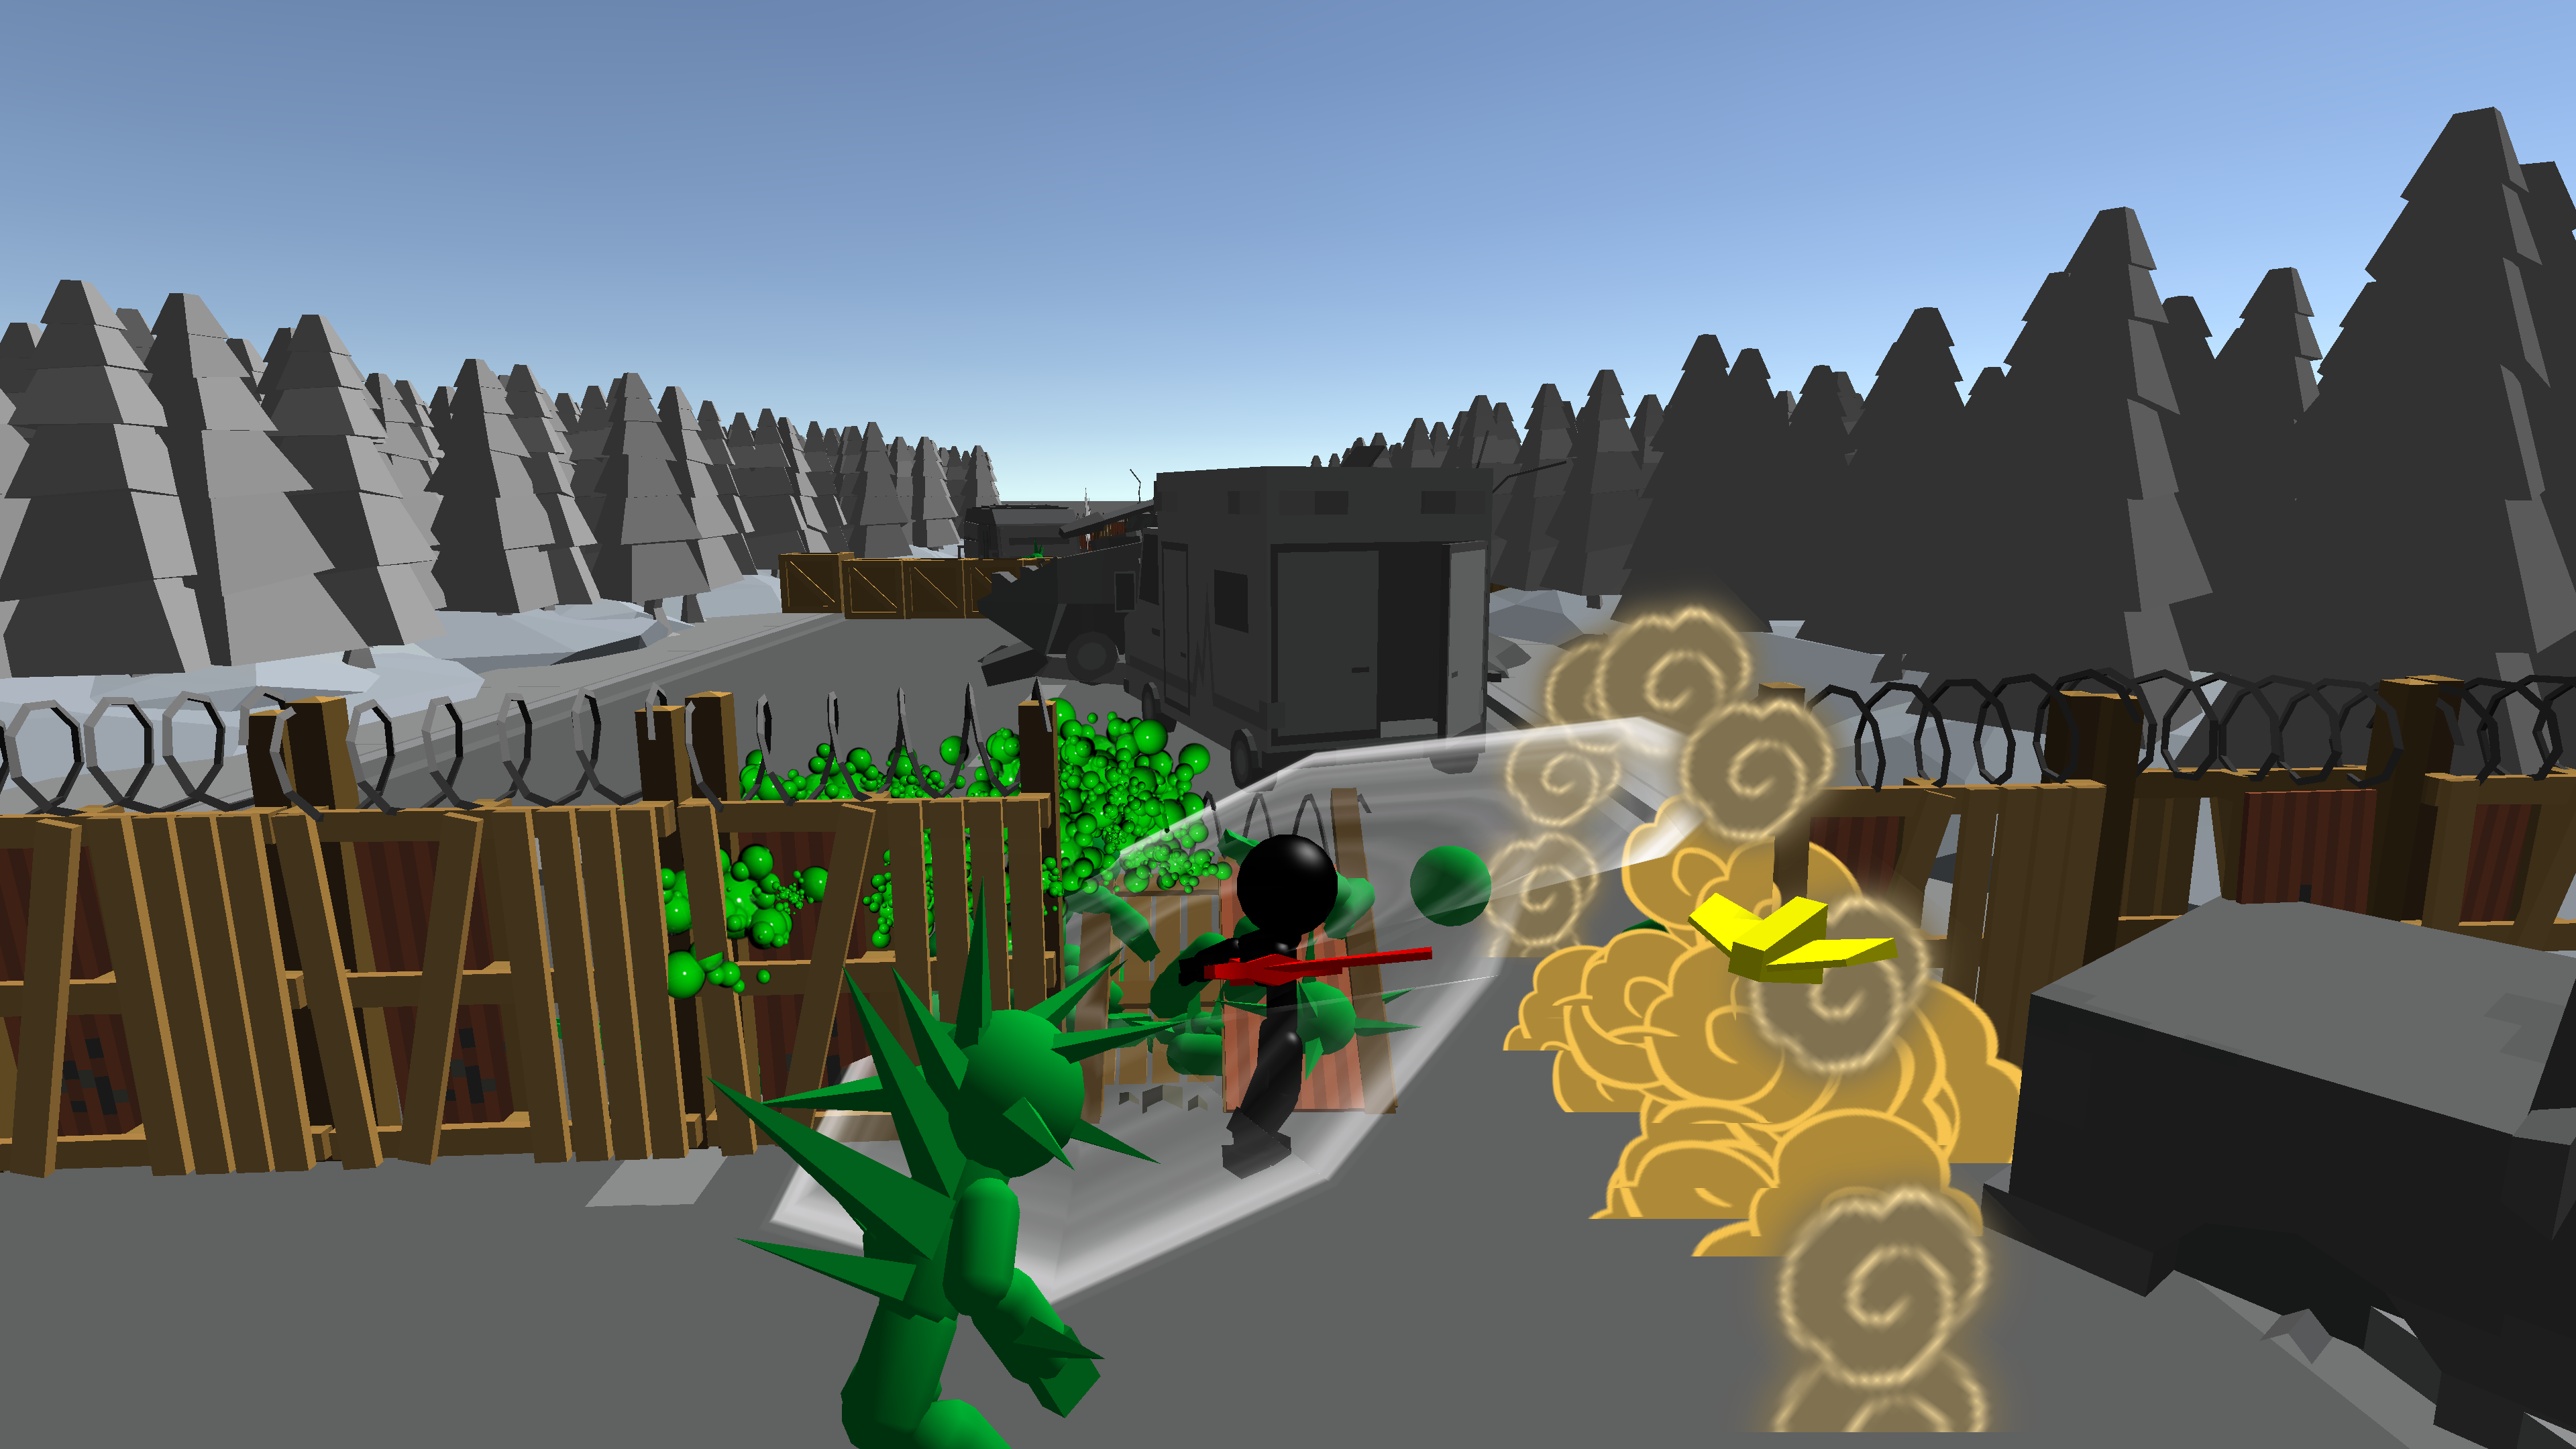 Screenshot of Stickman Killing Zombie 3D